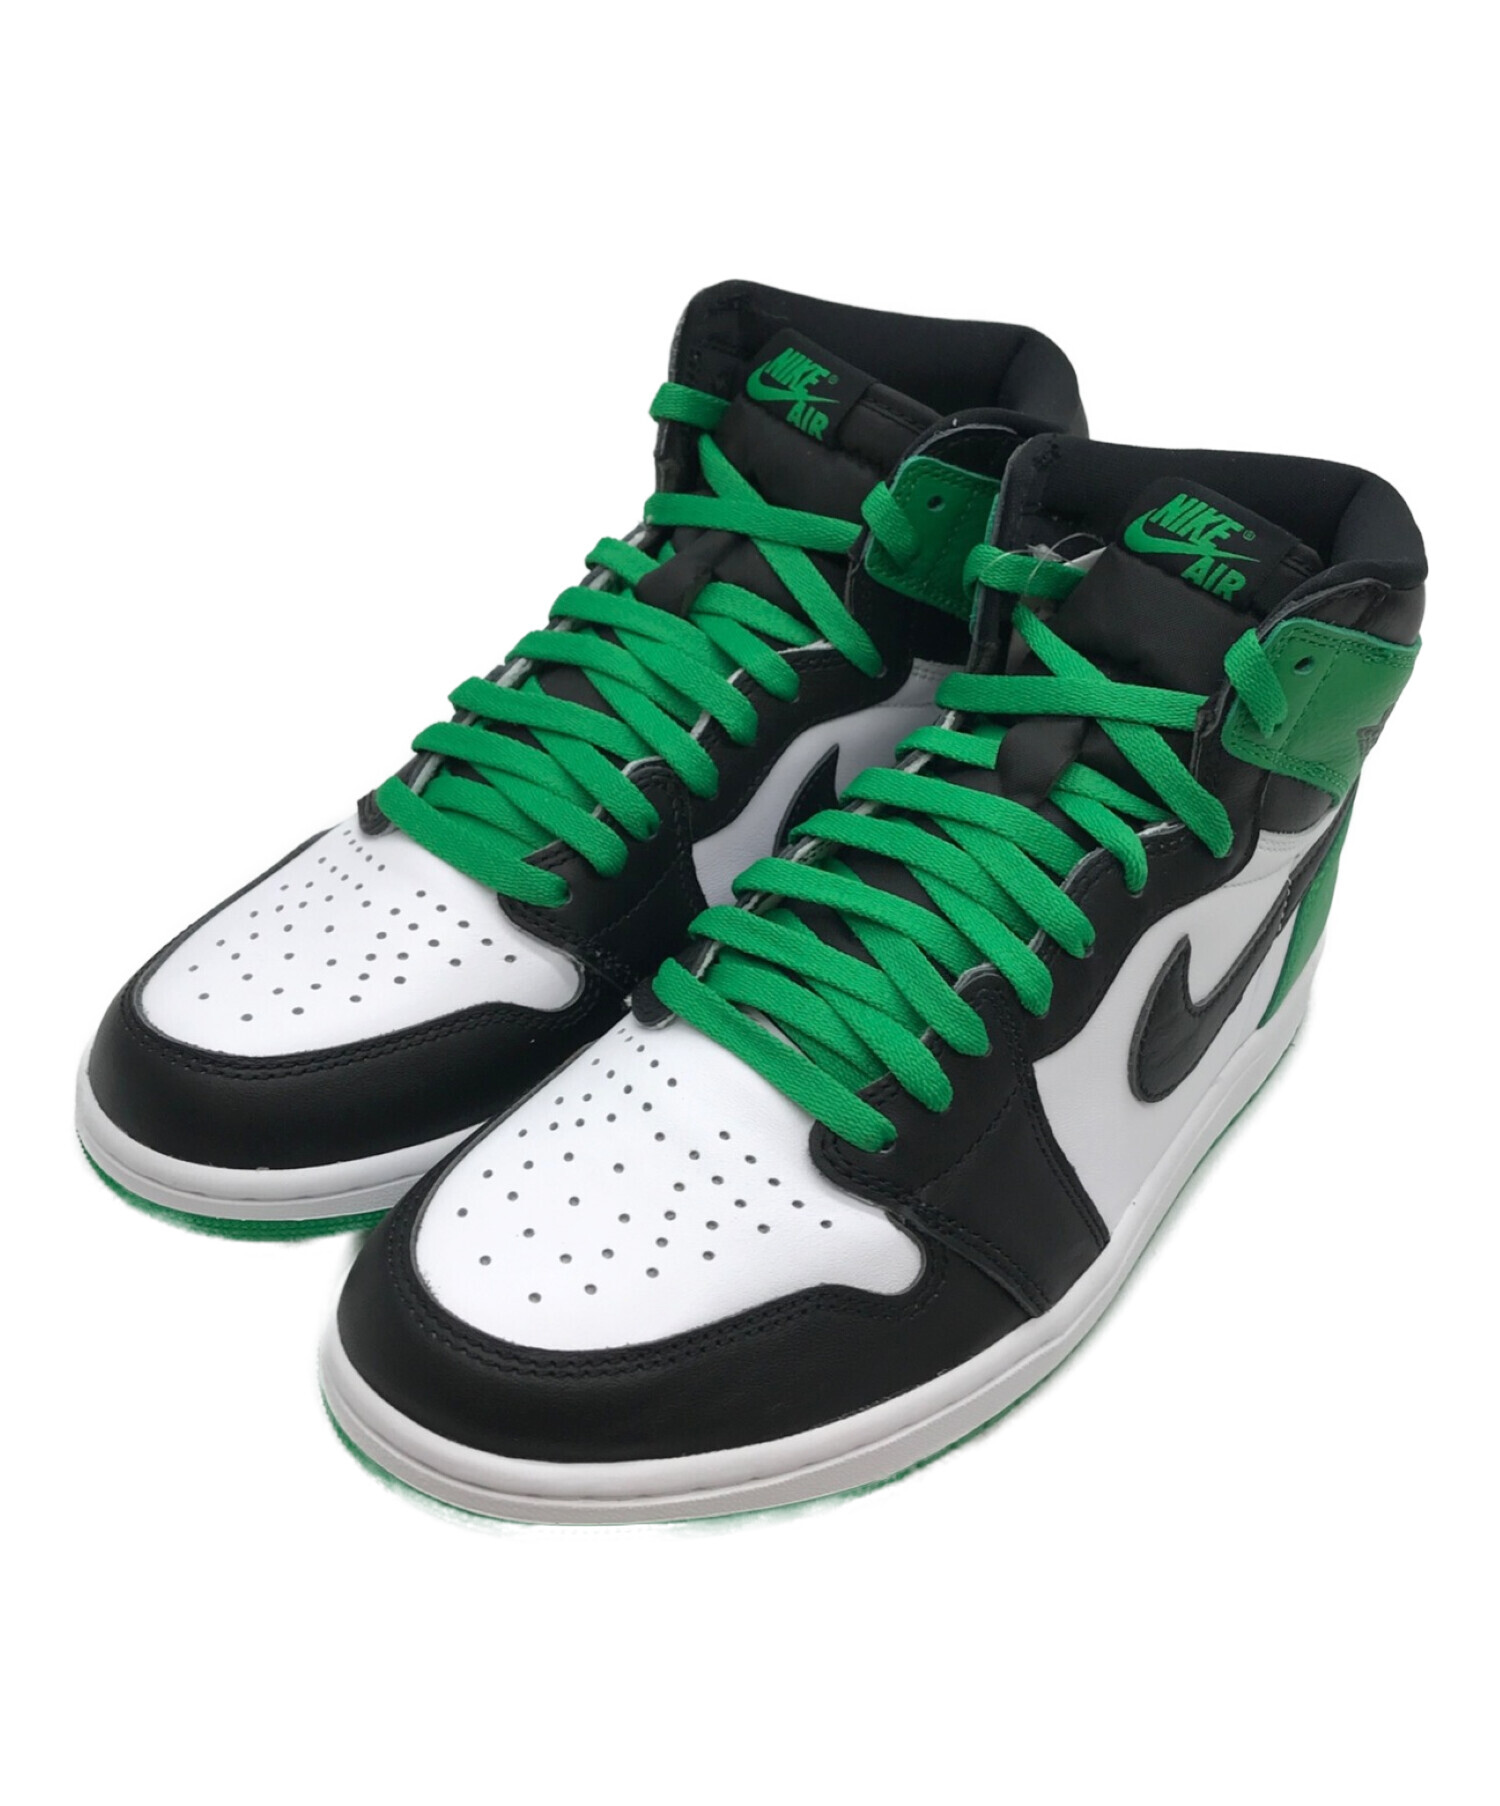 Jordan1 Celtics/Black and Lucky GreenAirforce